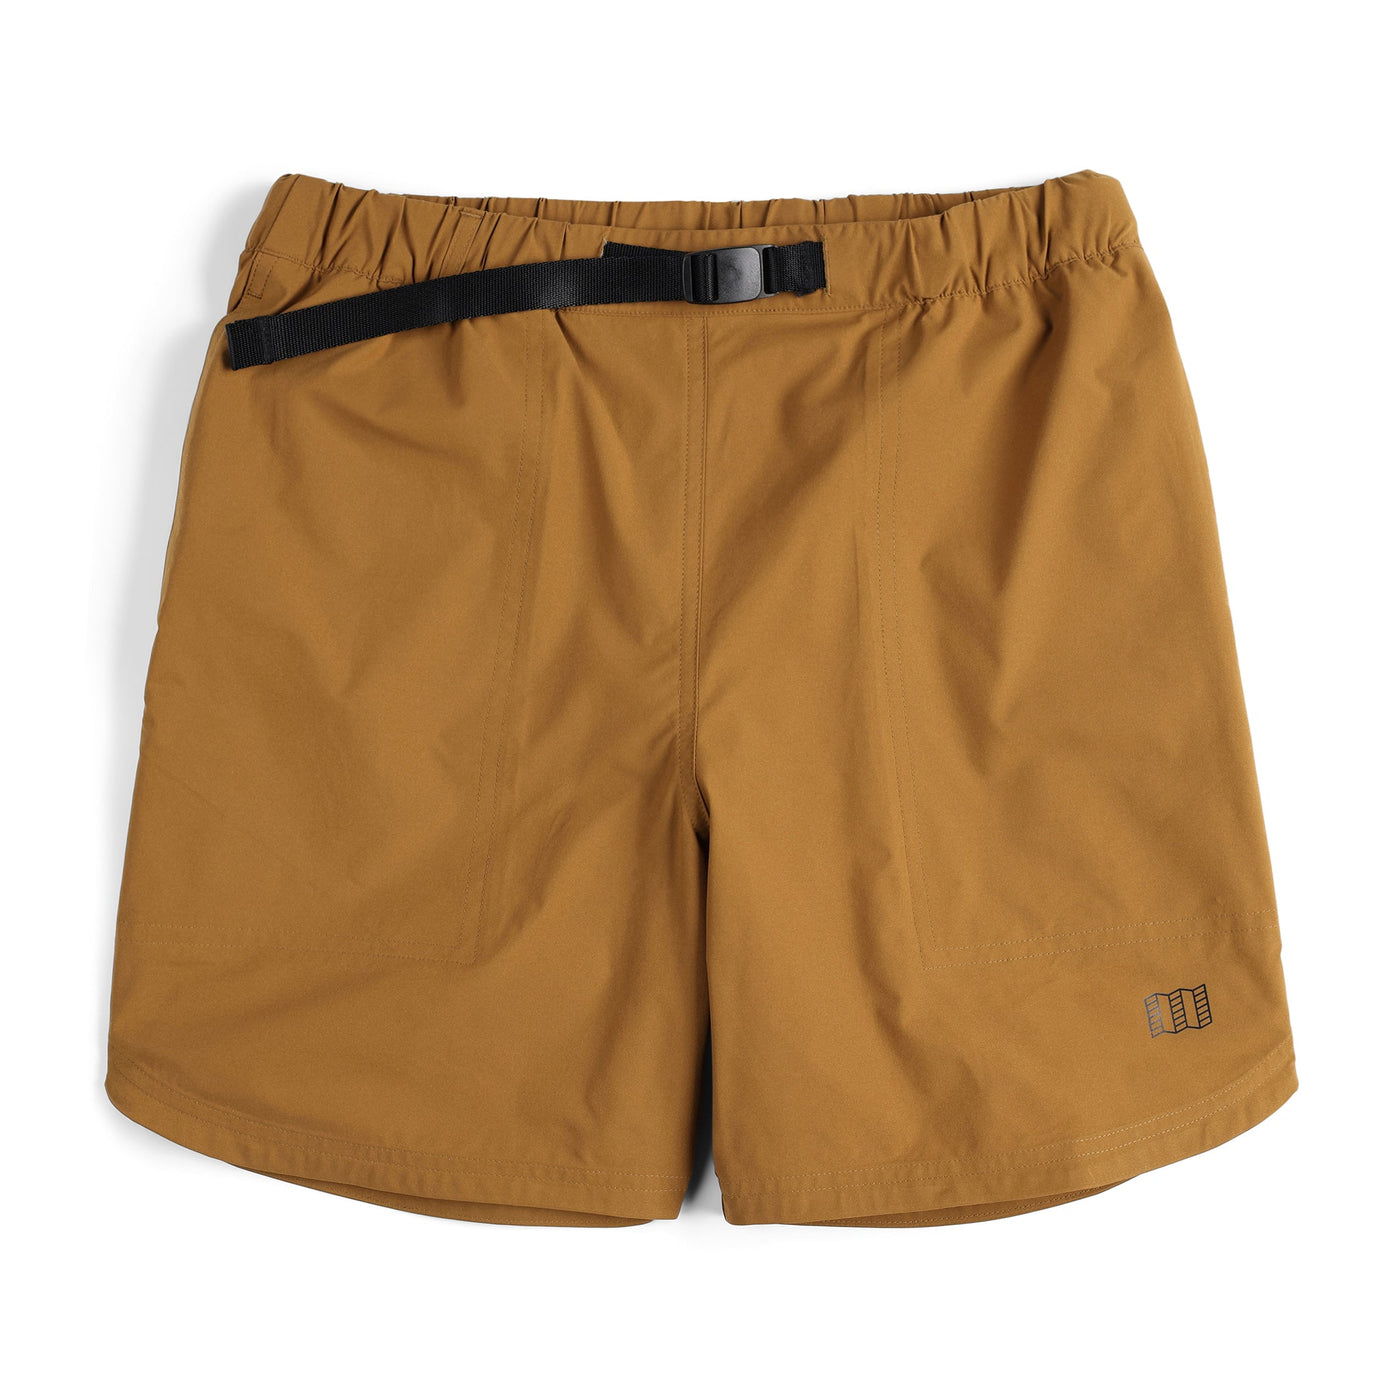 Topo Designs Men's River Shorts Lightweight quick dry swim trunks in "Dark Khaki" brown.